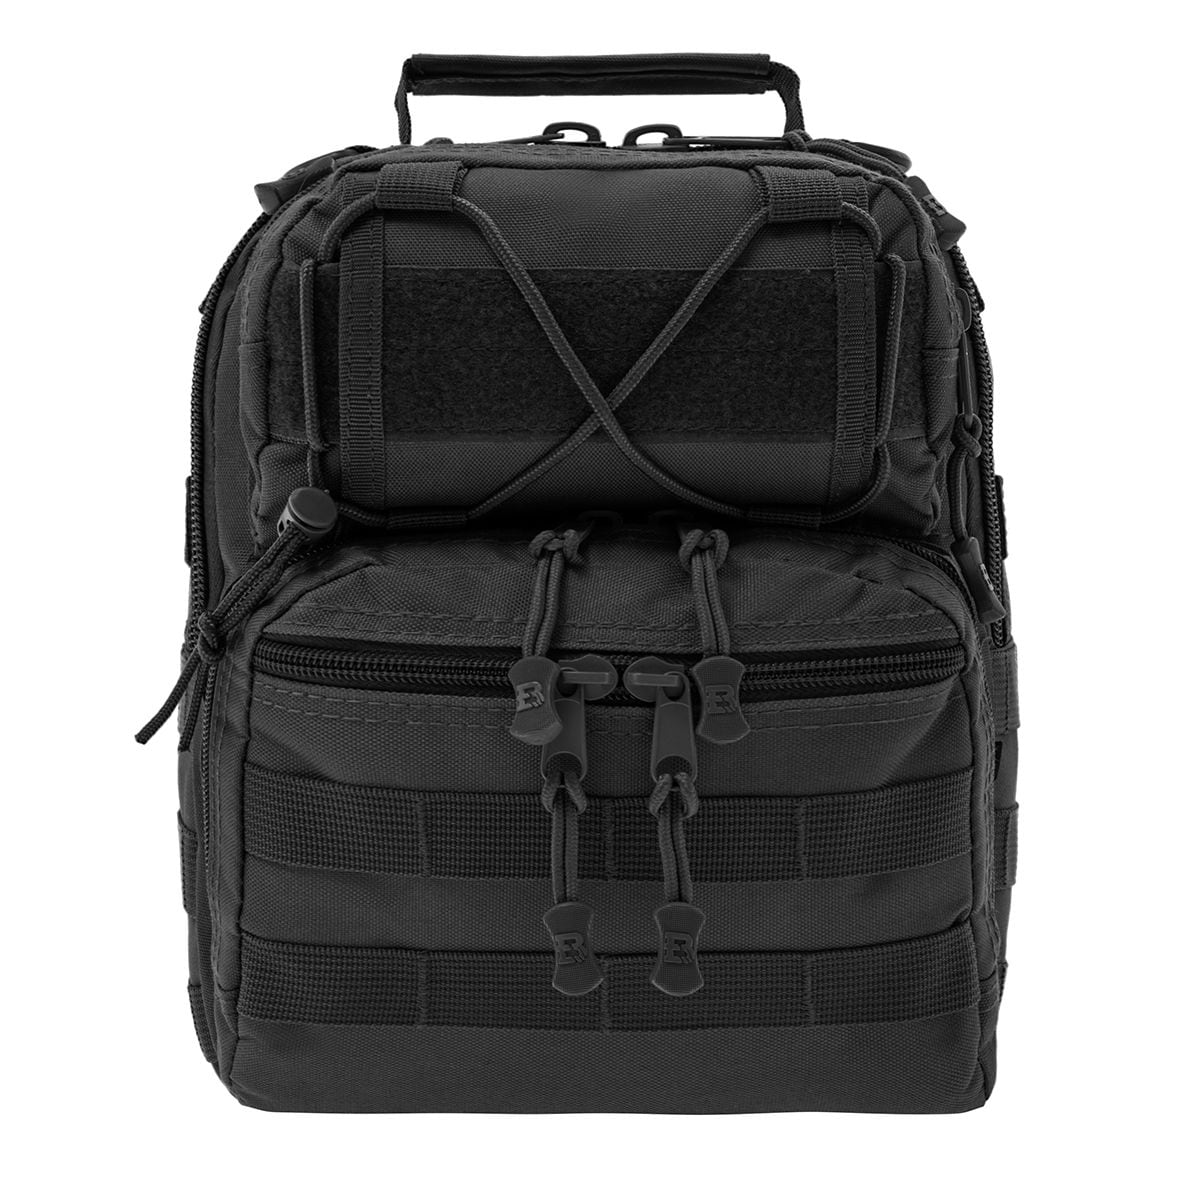 318219_torba-badger-outdoor-sling-tactical-large-black-przod